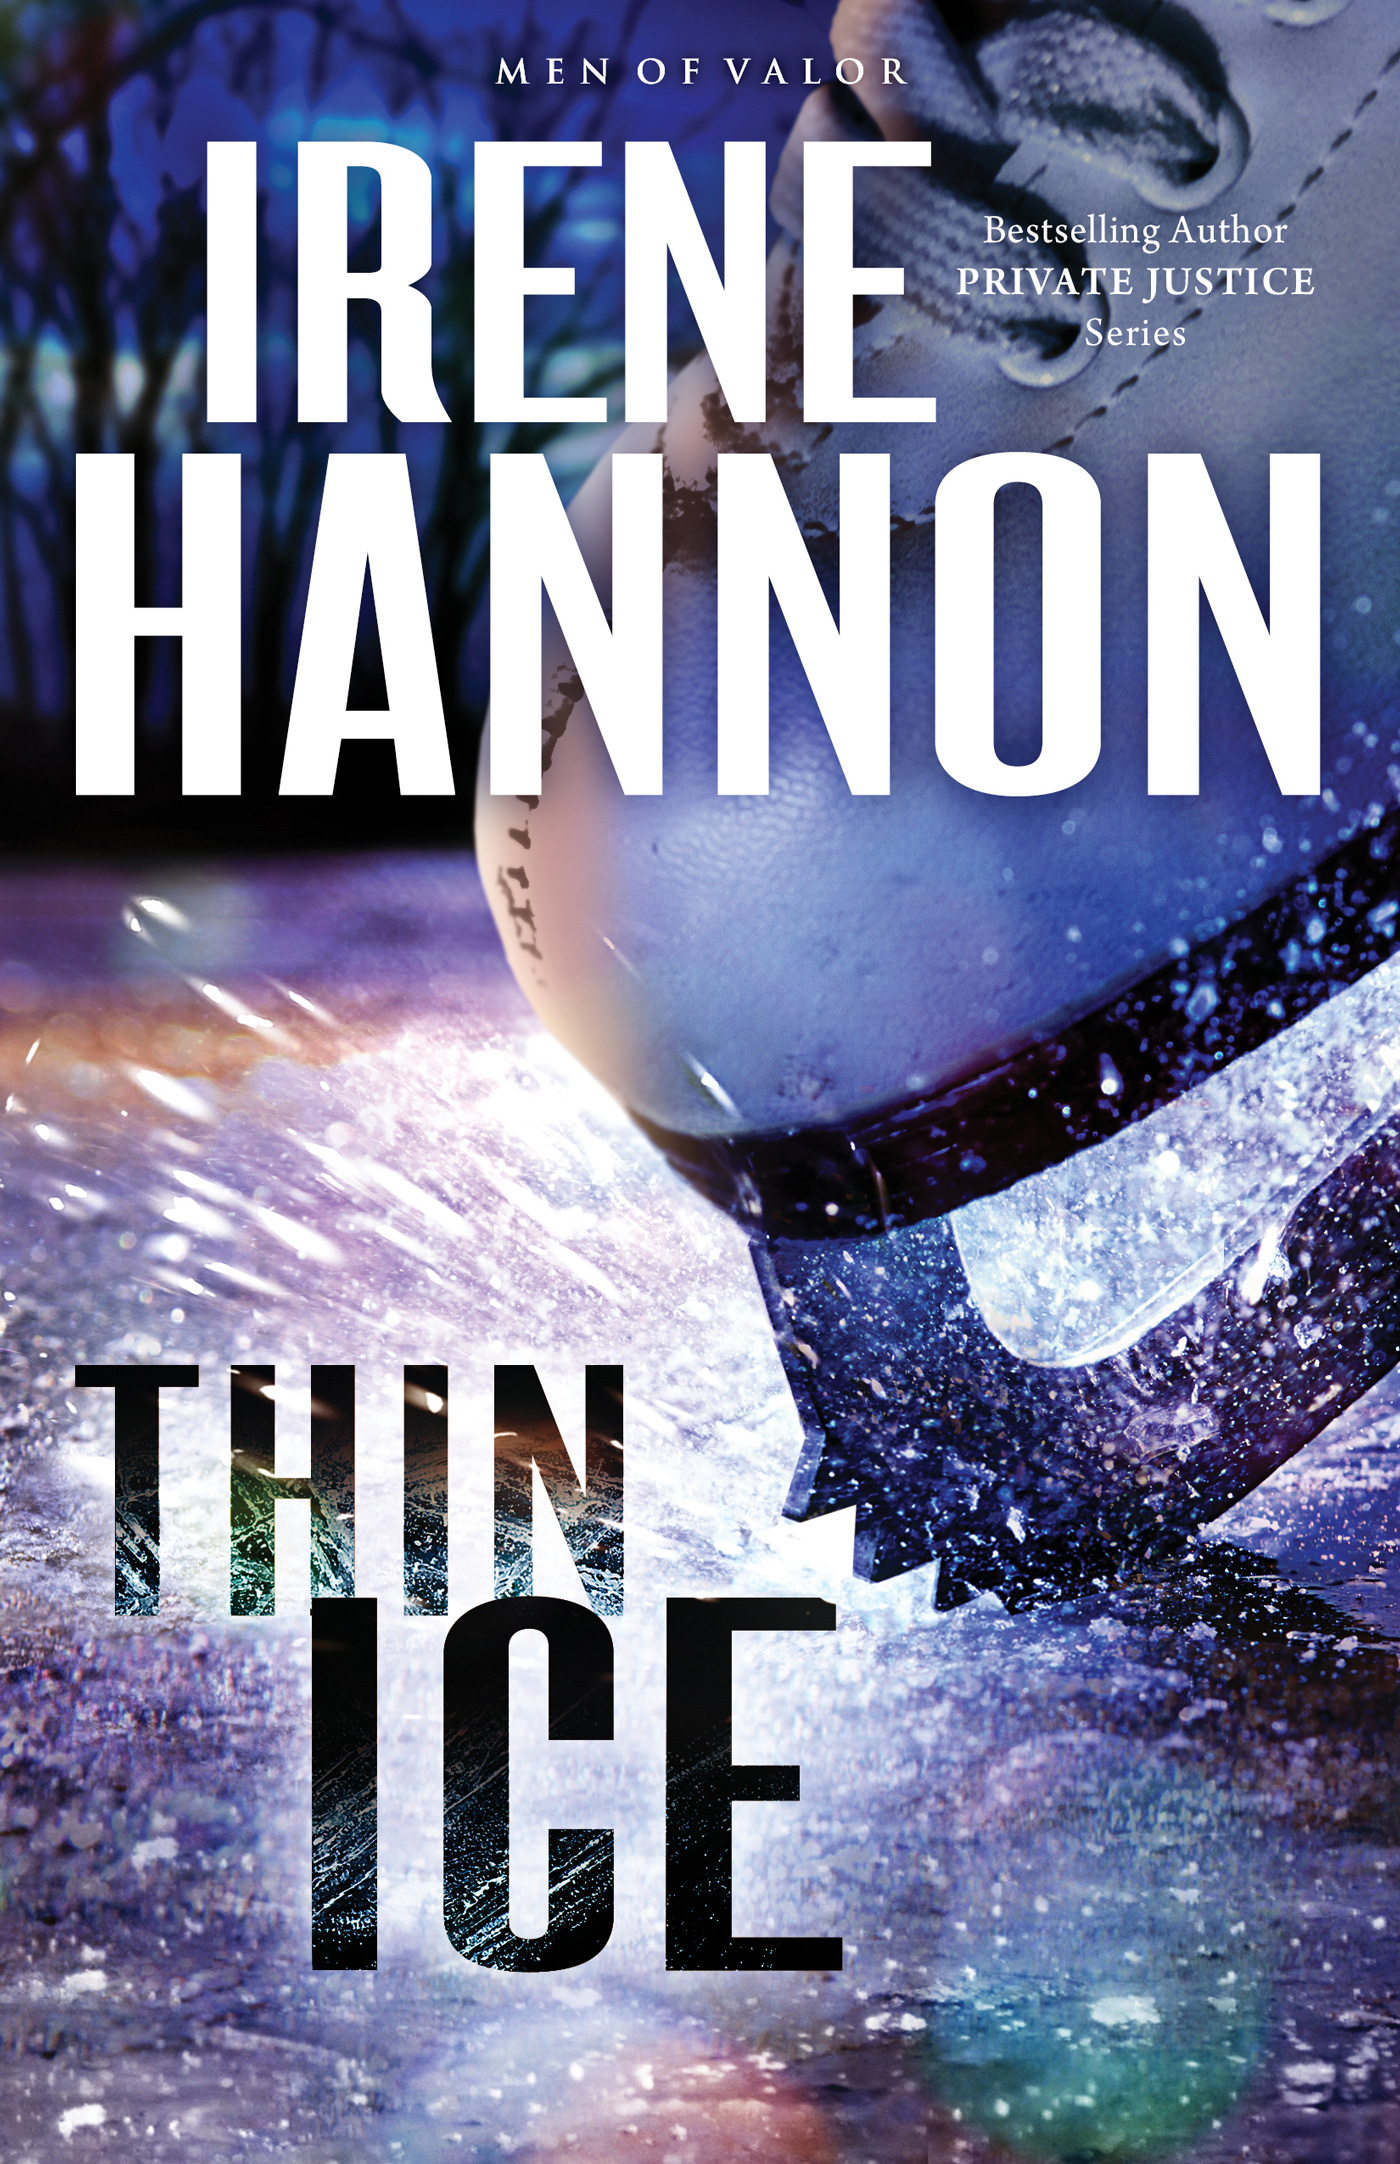 Thin Ice (2015) by Irene Hannon